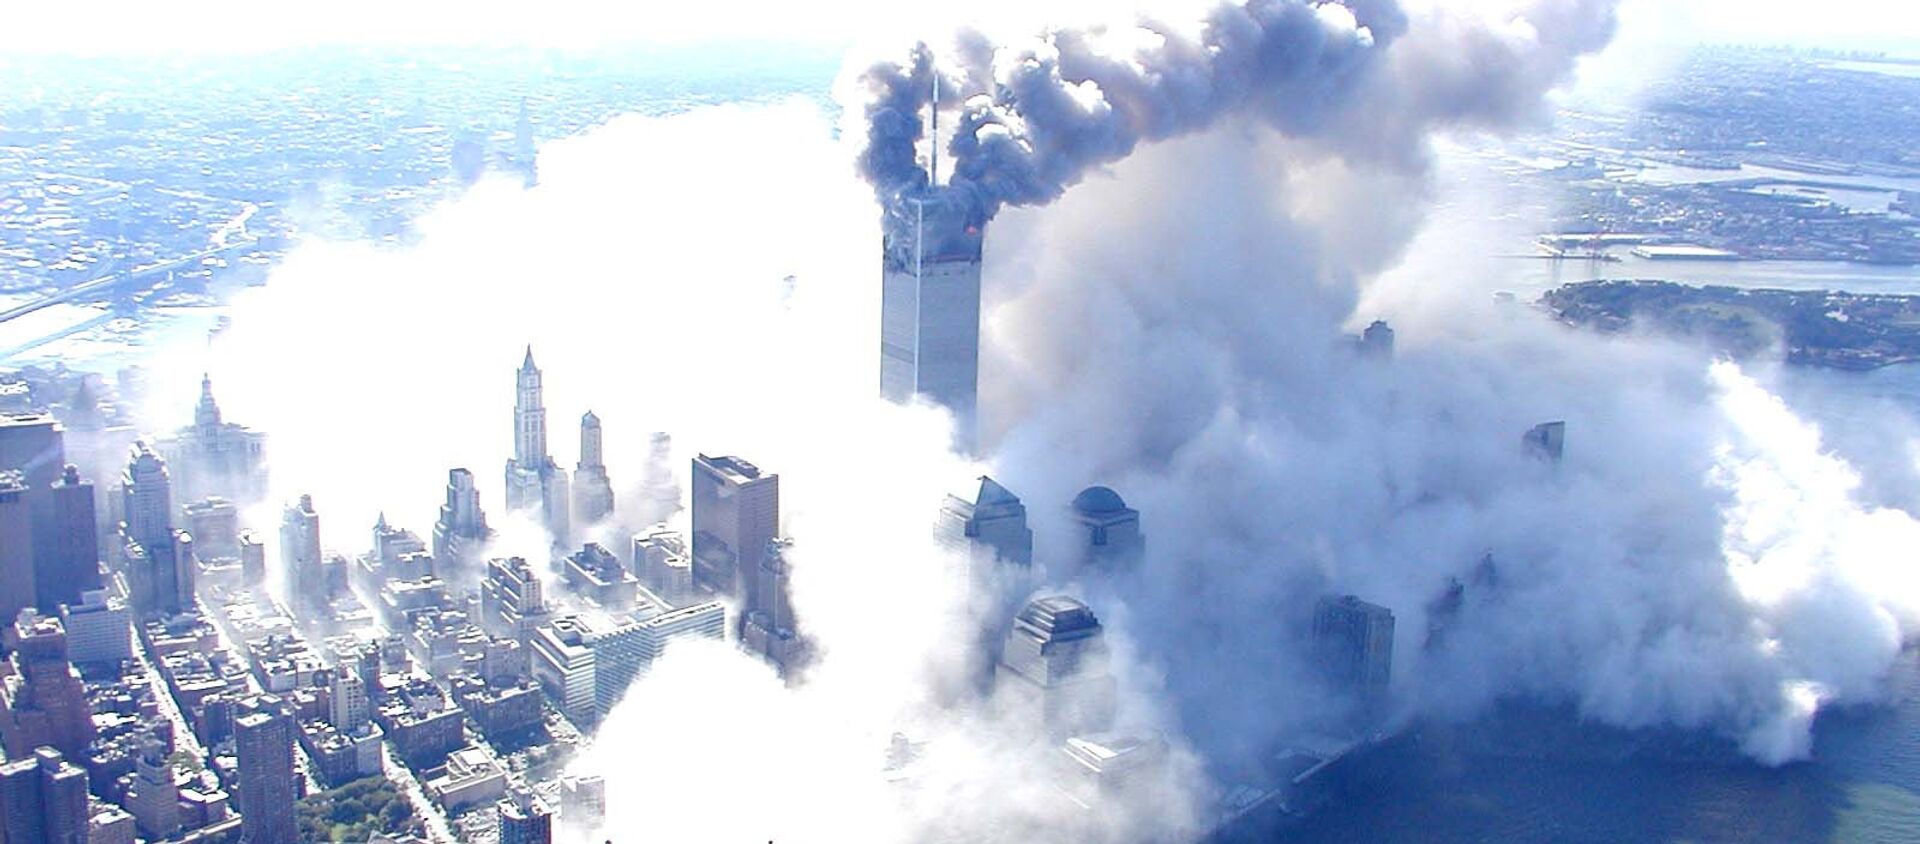 9/11 World Trade Center Attack - Sputnik International, 1920, 03.05.2018